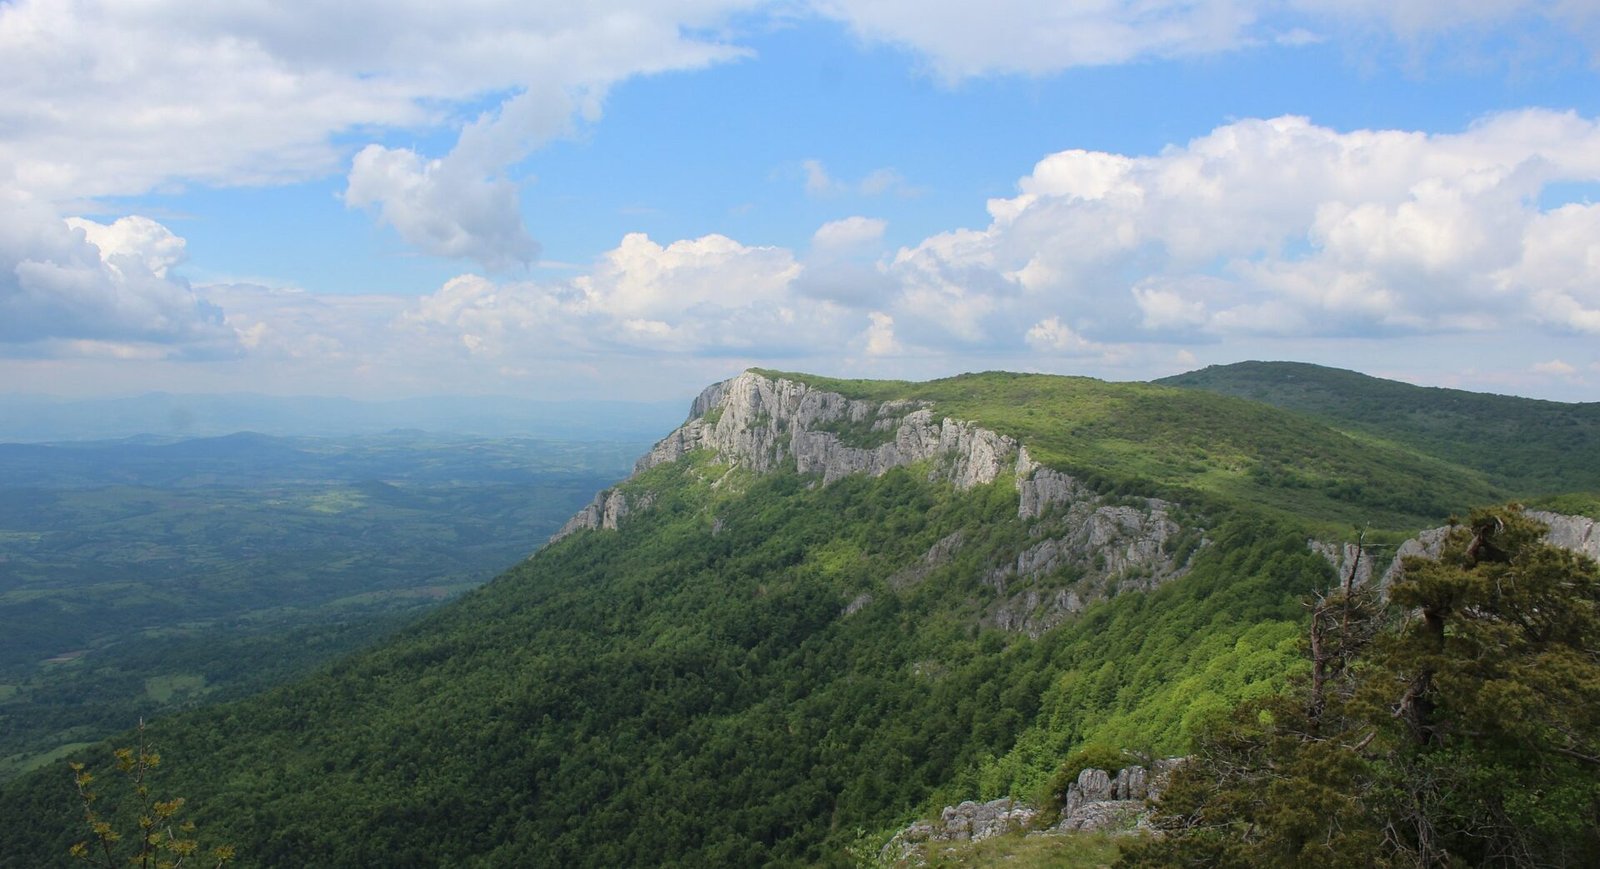 Tupižnica mountain